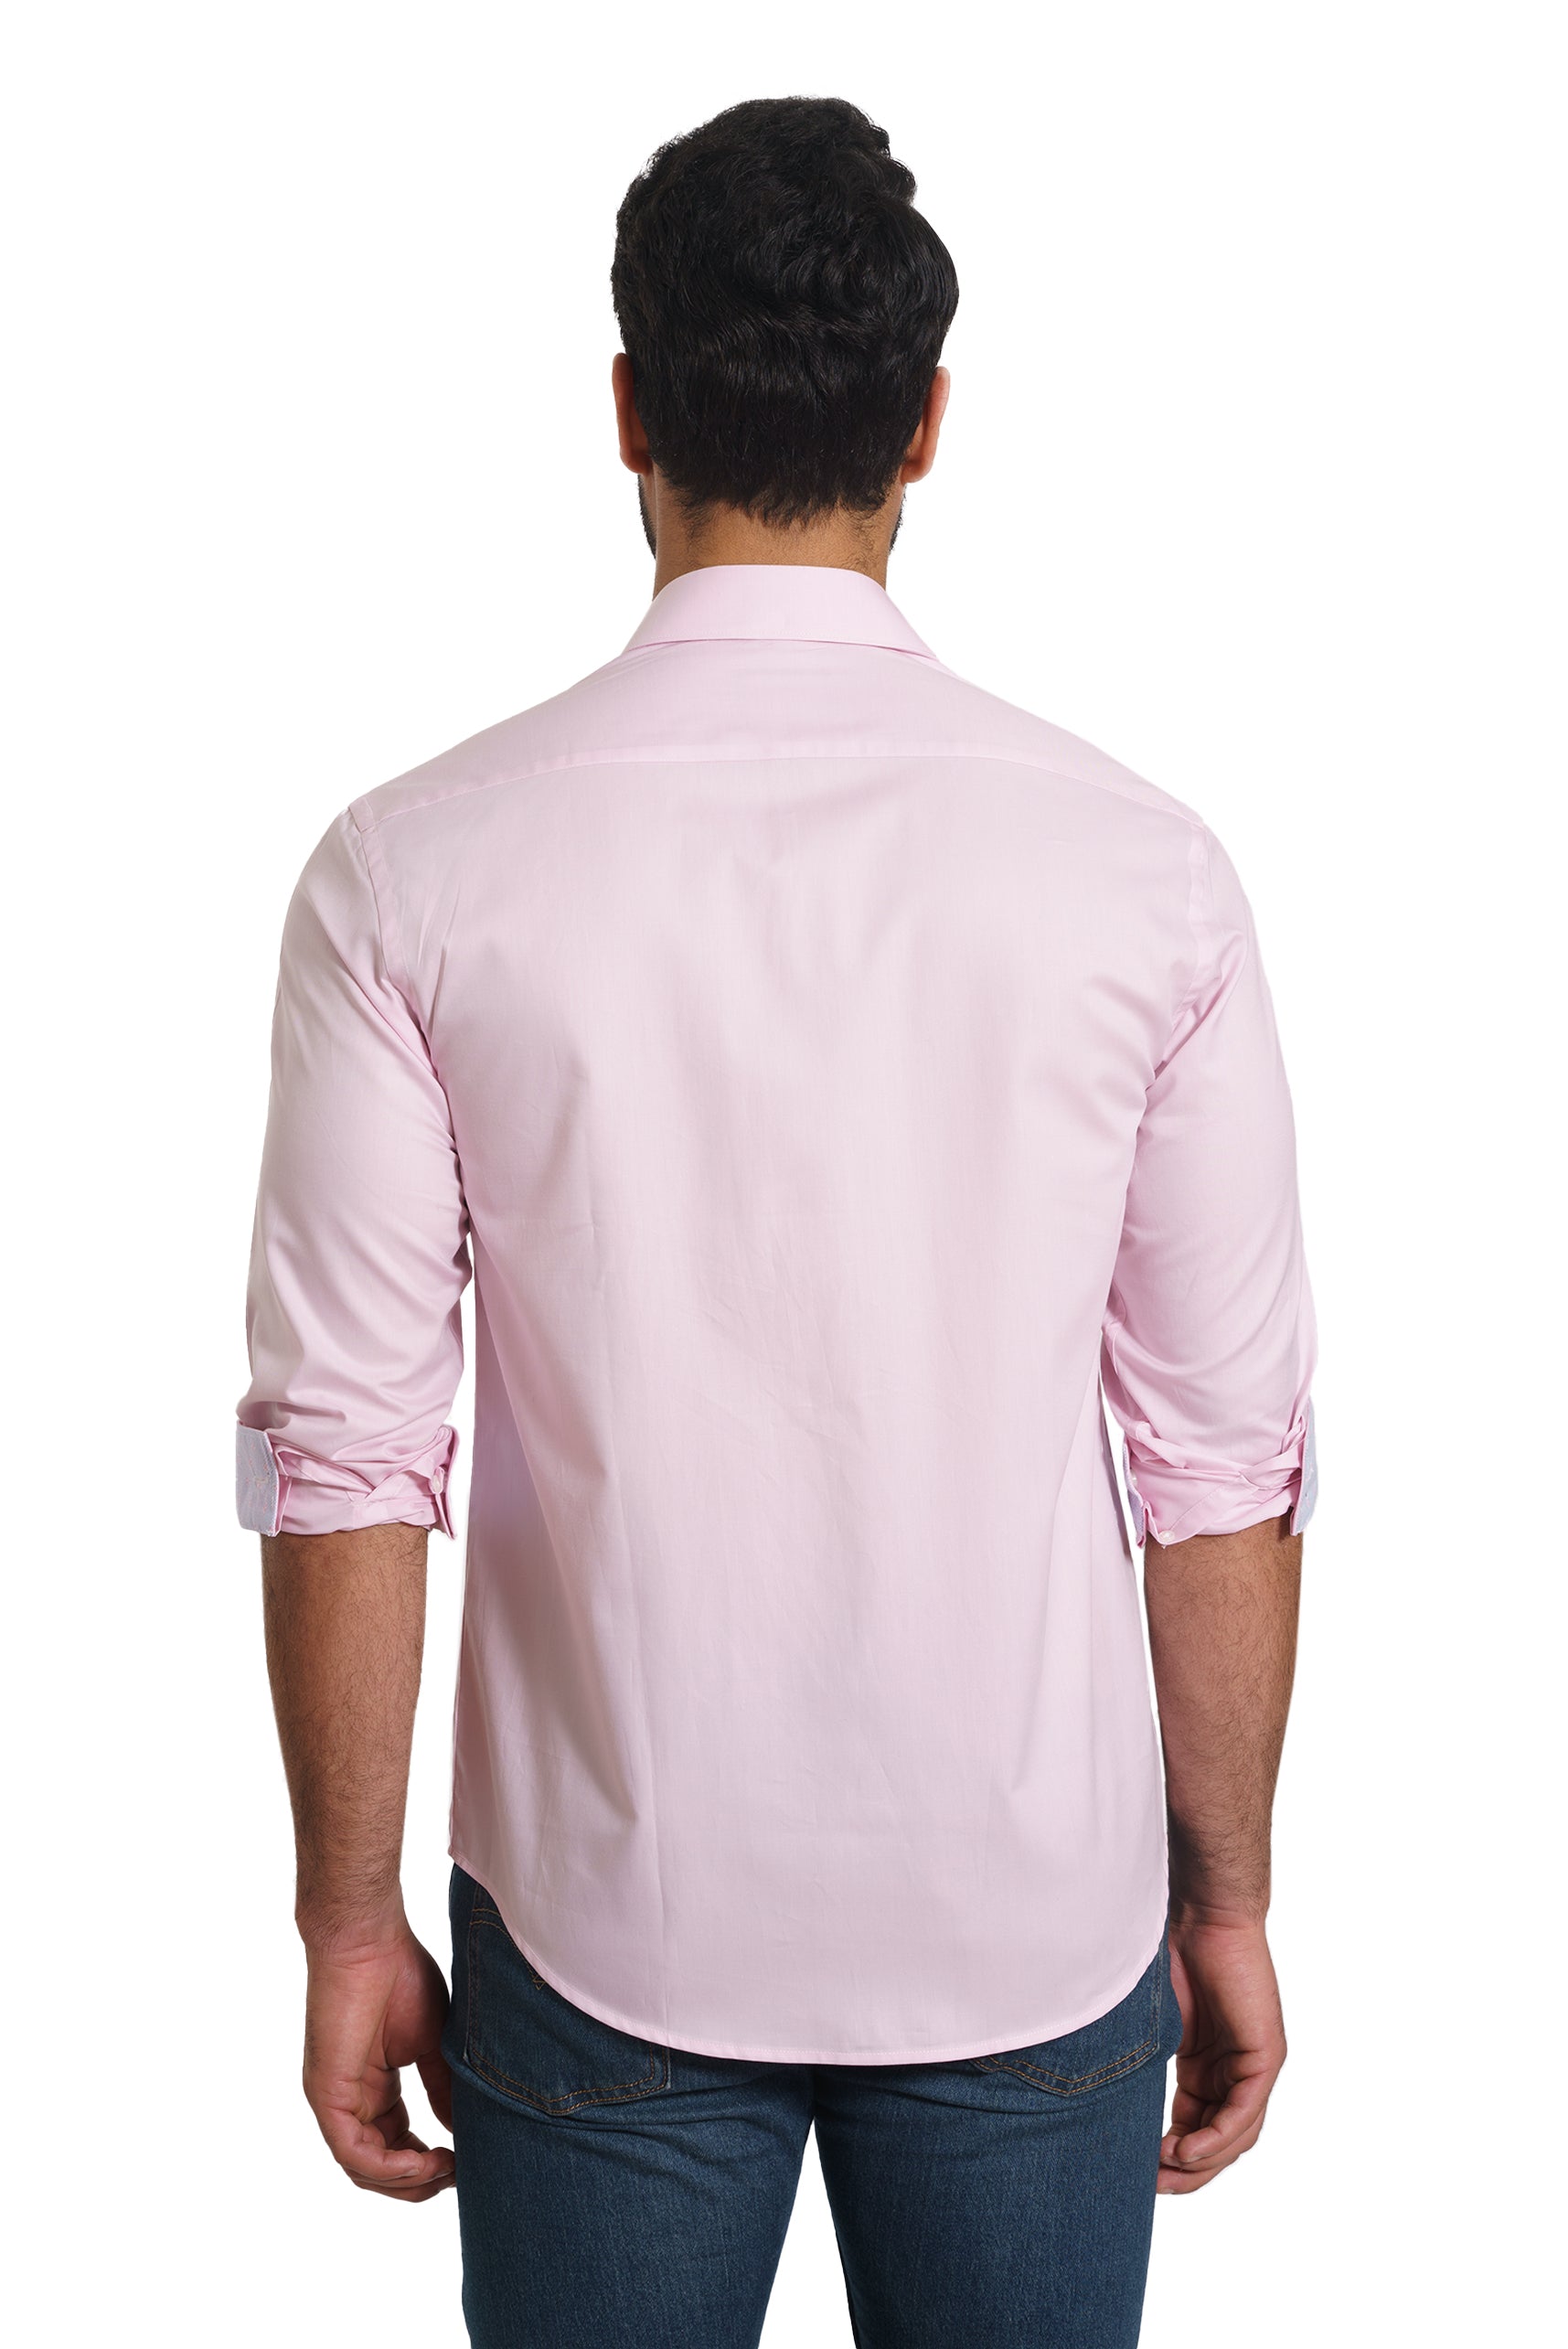 Pastel Pink Long Sleeve Shirt TP-7142 Back